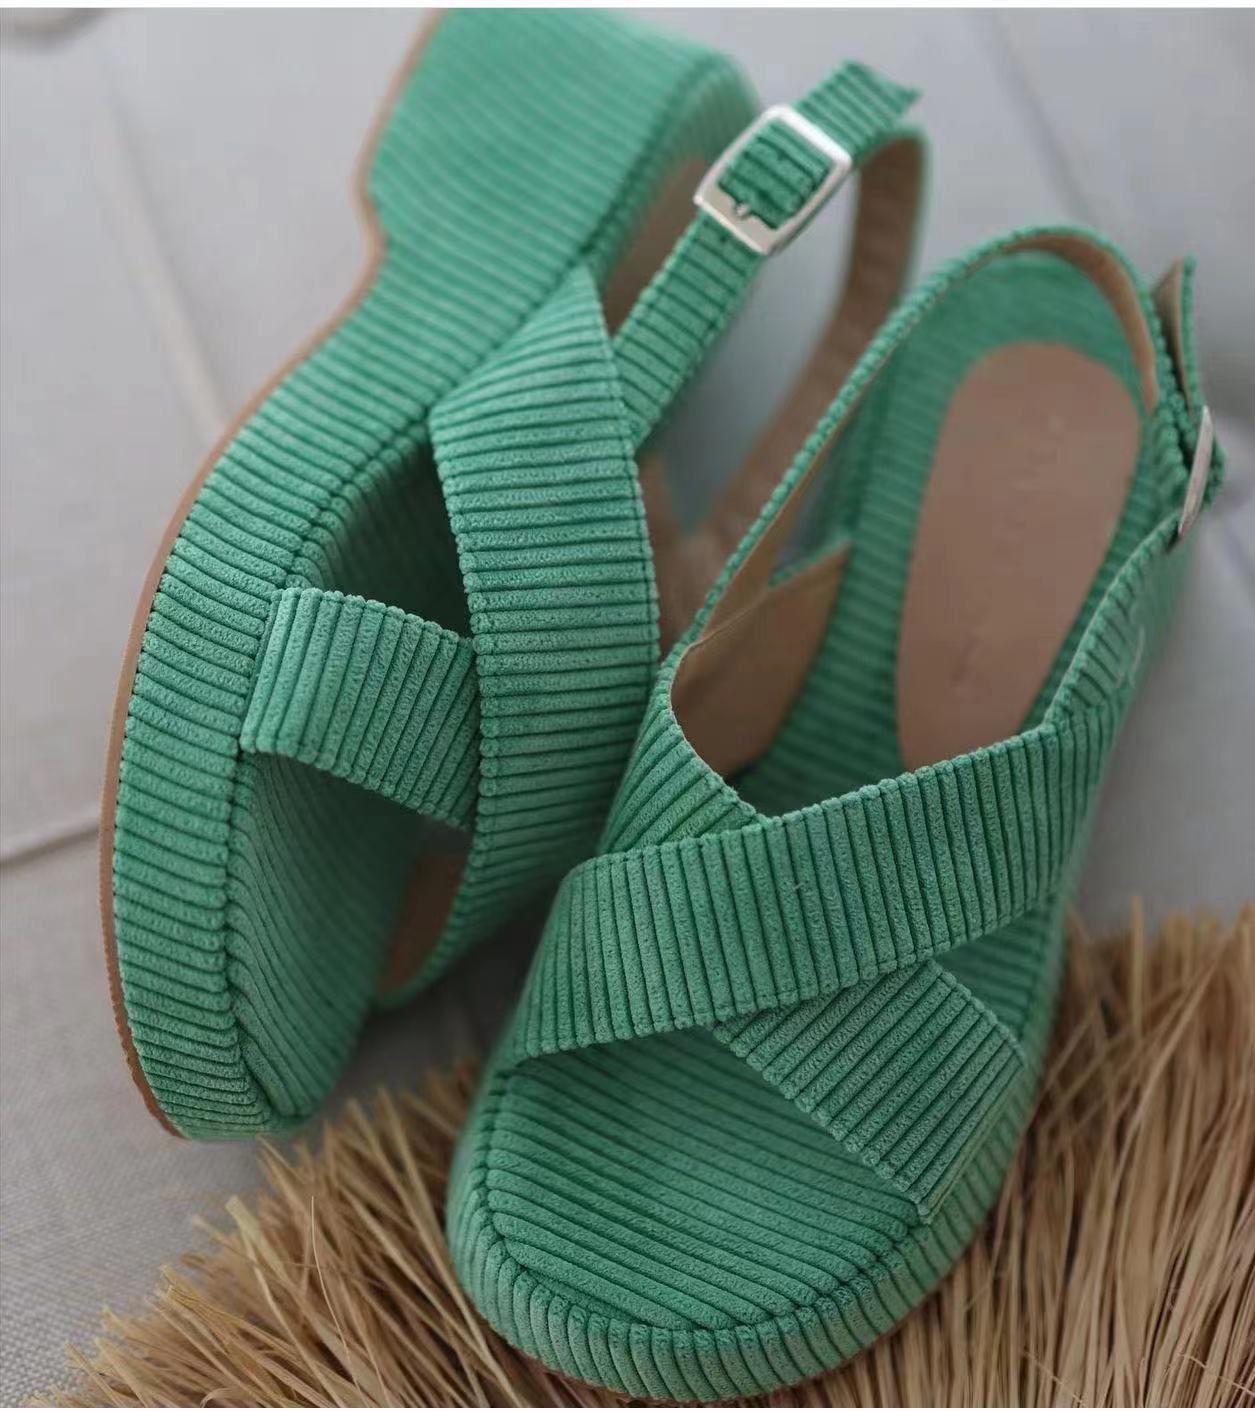 Platform sandals  | Women Suede Cross Strap Casual Fashion Open Toe Sandals | Green |  36| thecurvestory.myshopify.com